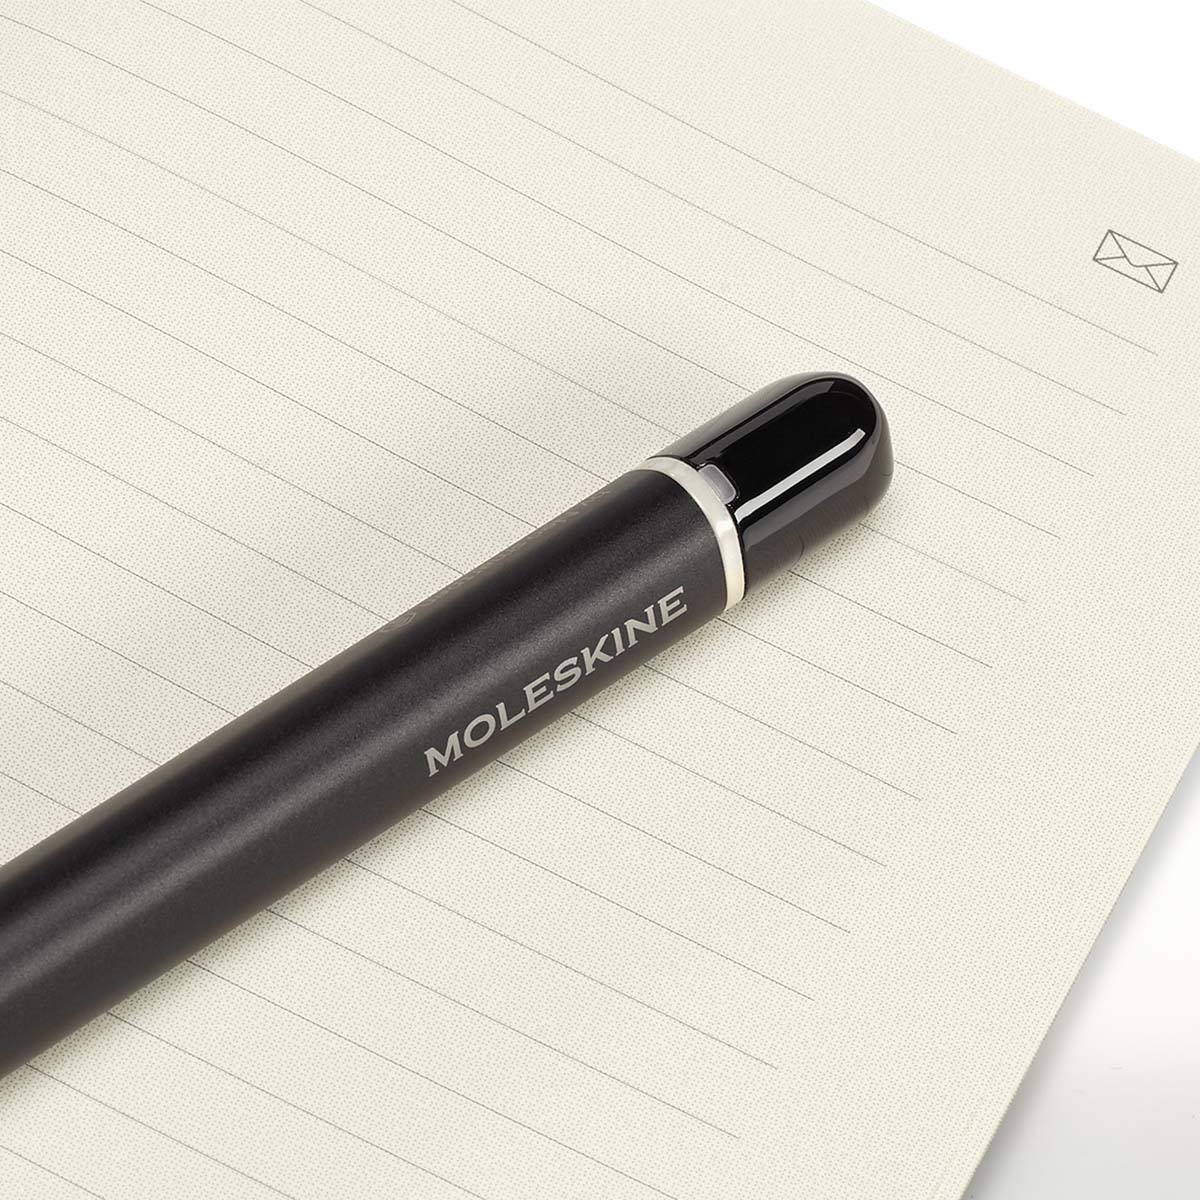 Pen+ Ellipse Digital Pen in the group Pens / Fine Writing / Ballpoint Pens at Pen Store (127741)